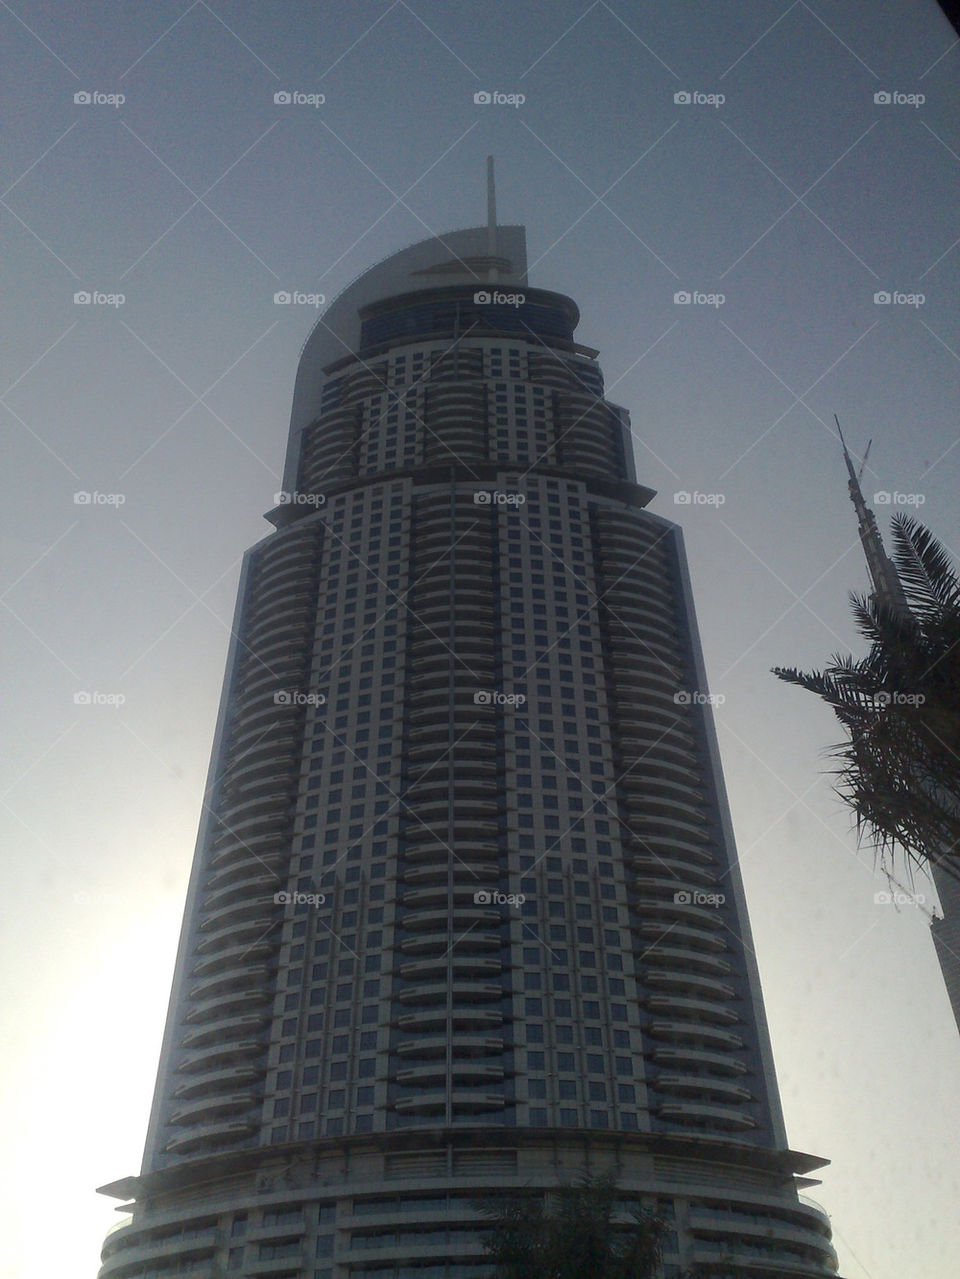 sky clear skyscraper dubai by alex900